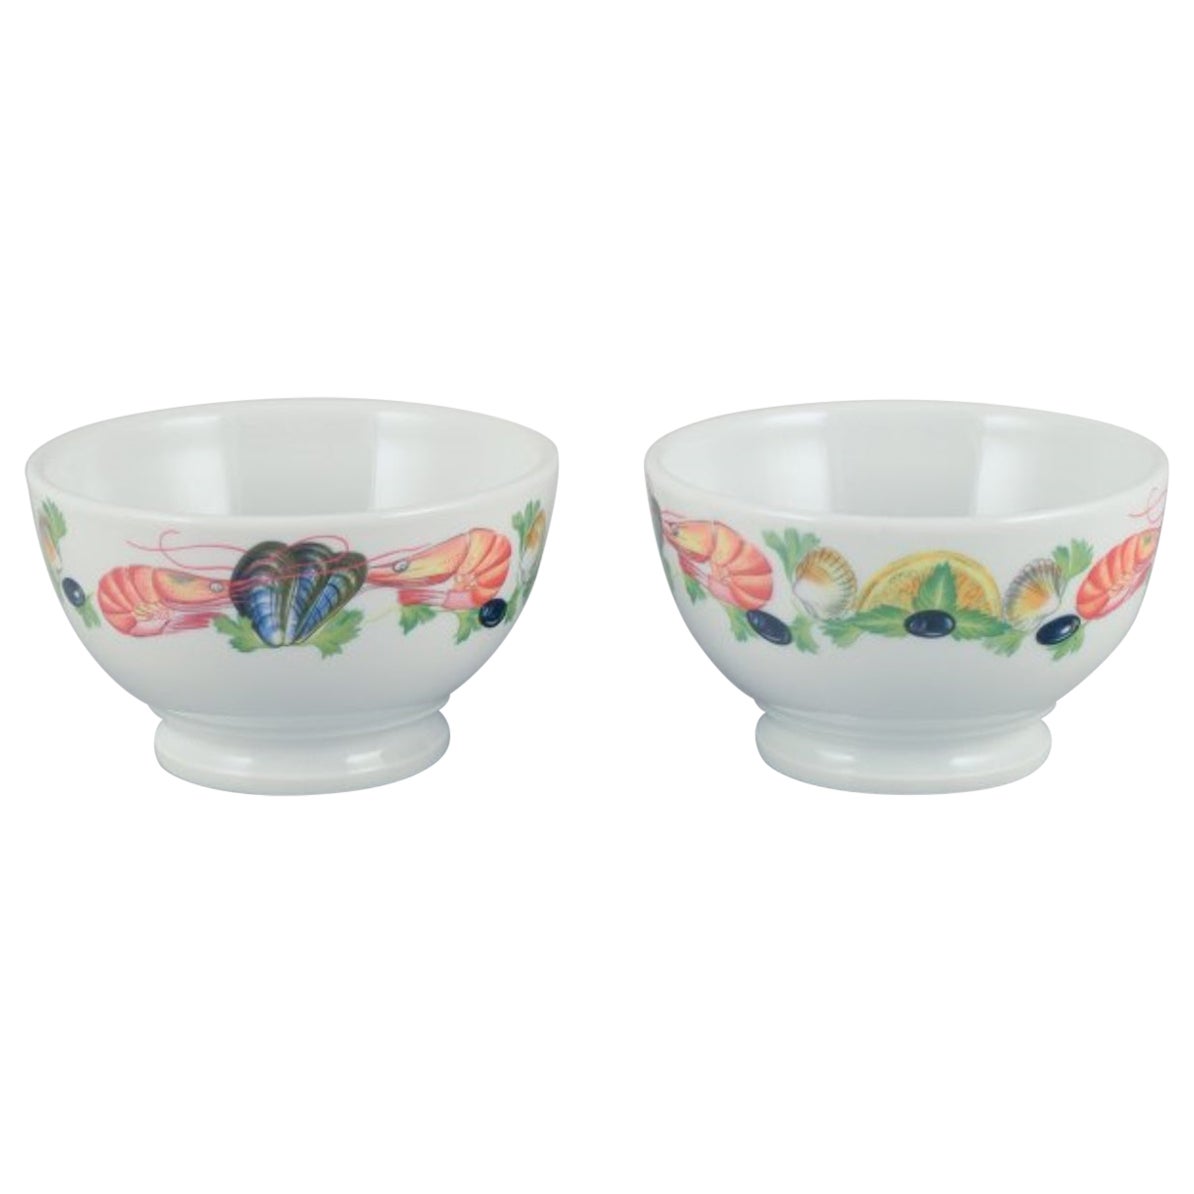 Pillivuyt, France. Set of two porcelain bowls with seafood motif.